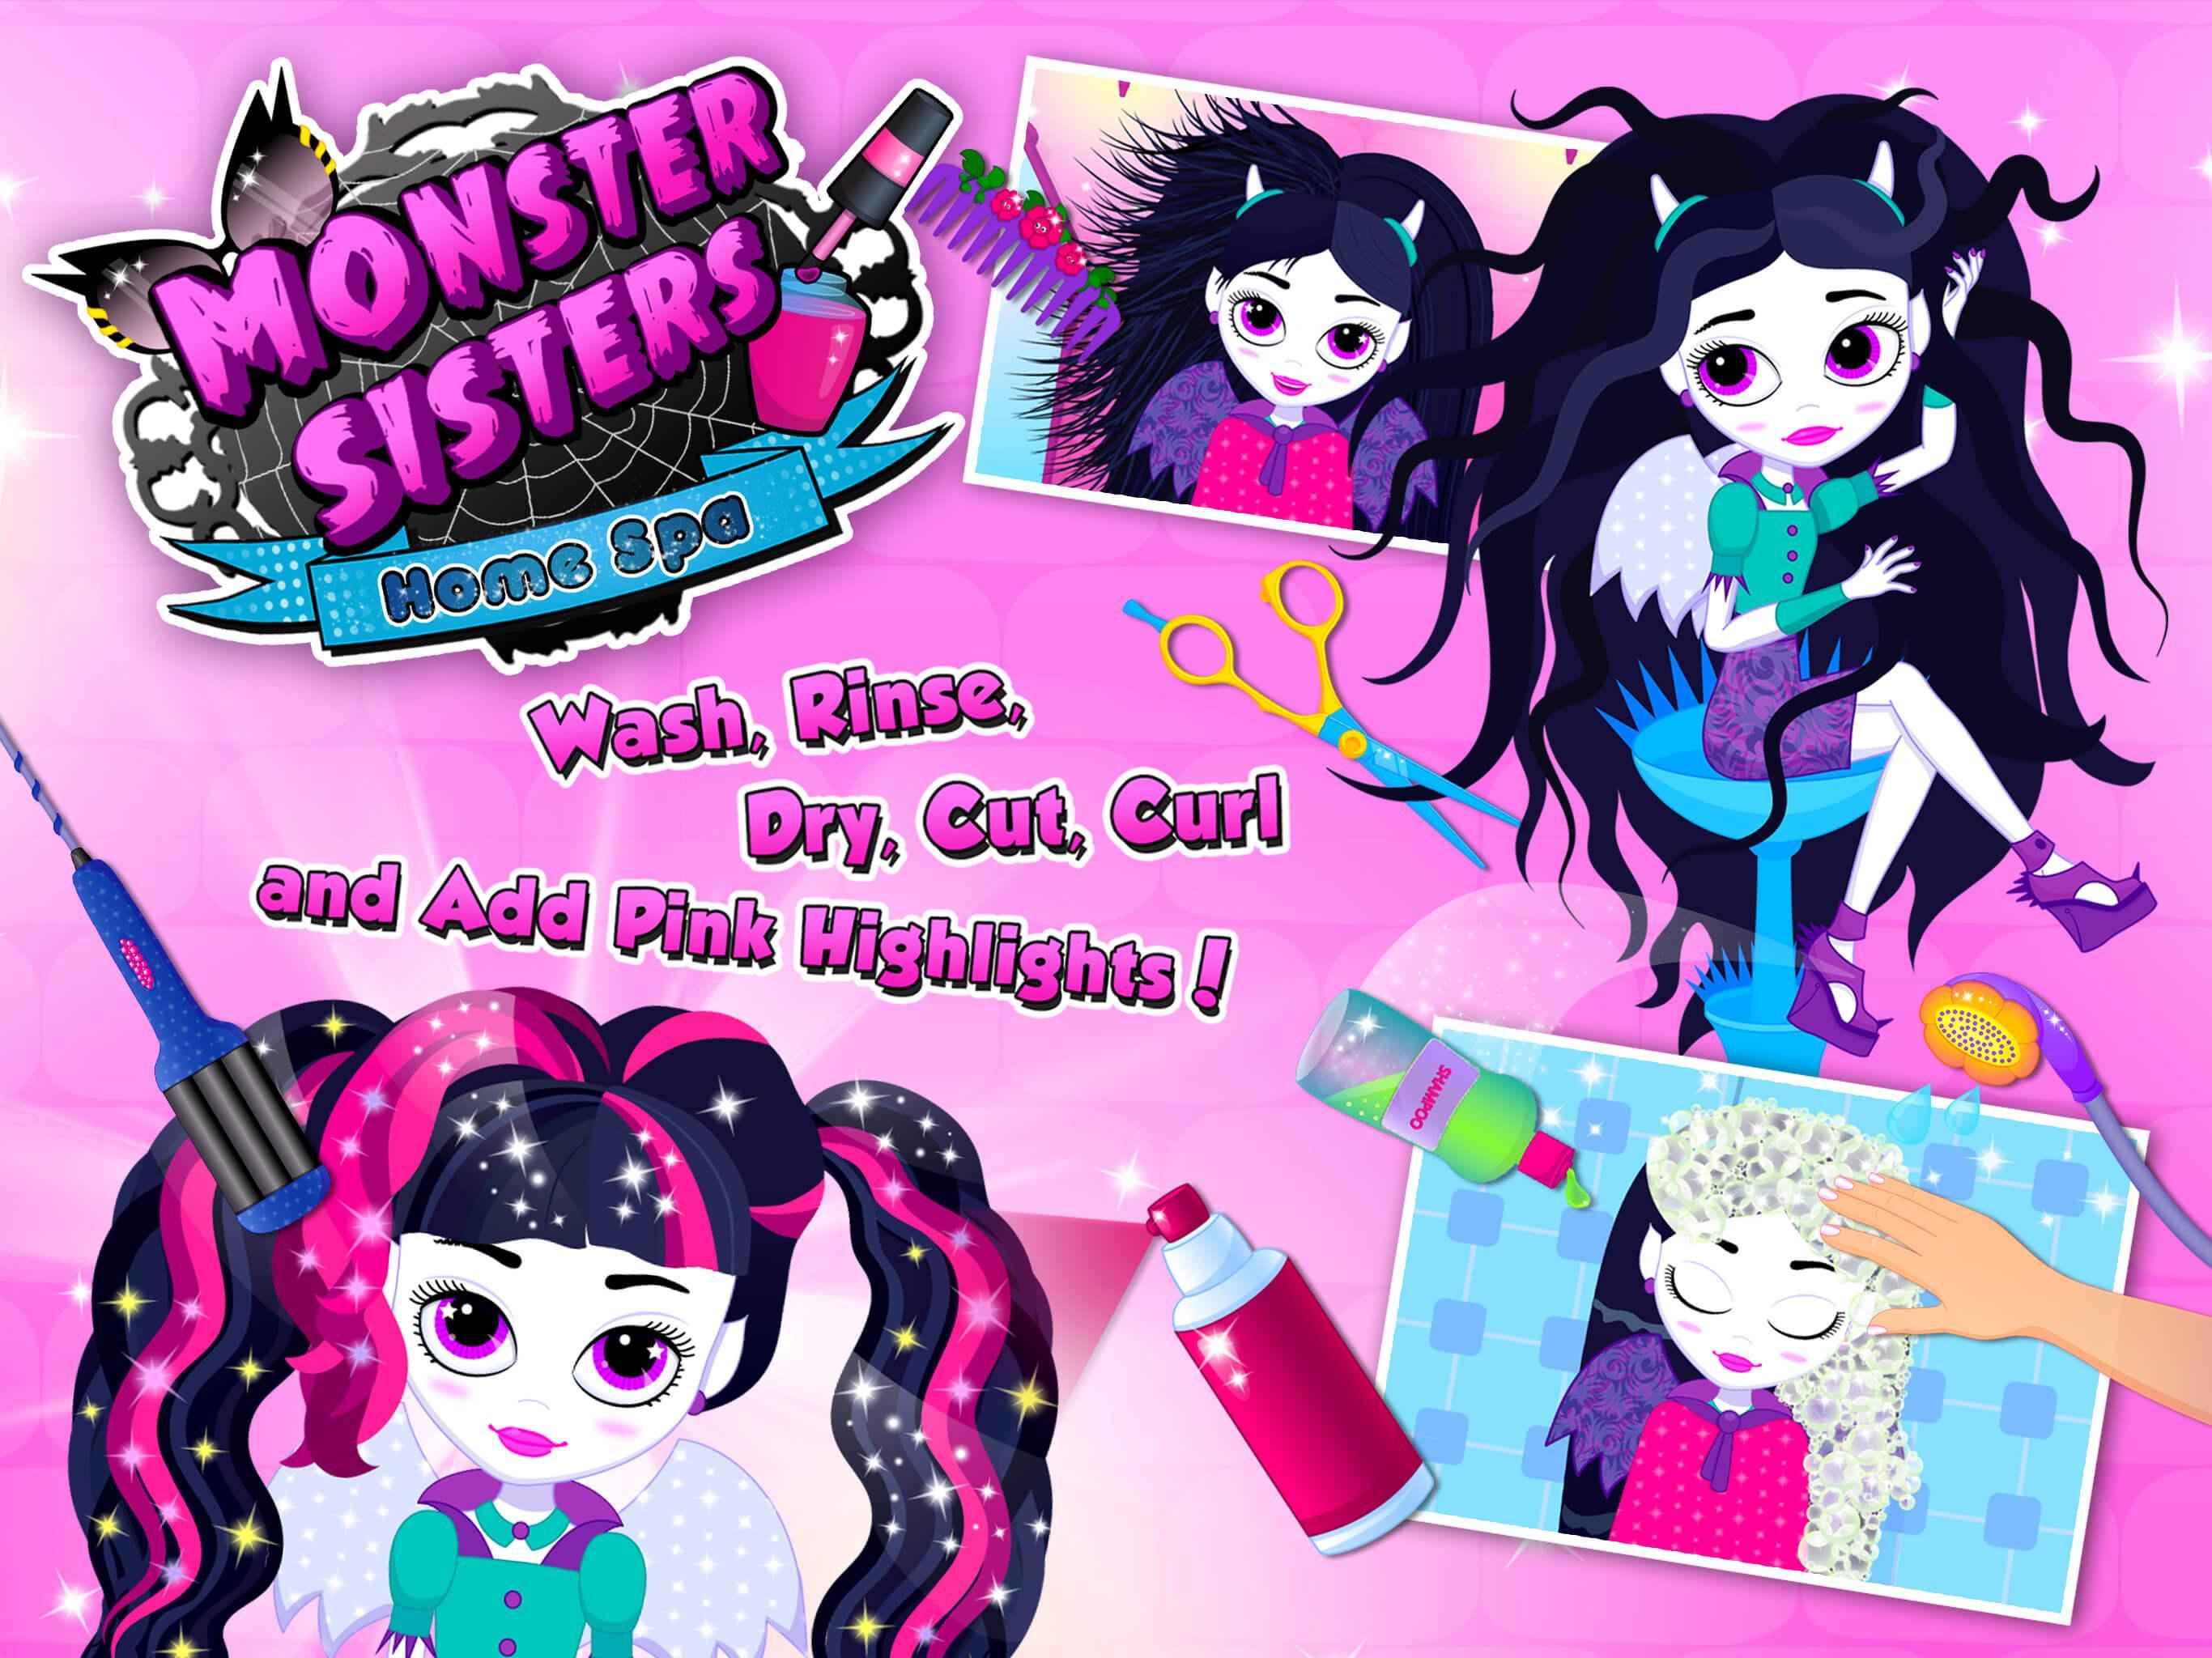 Monster Sisters 2 Home Spa 게임 스크린 샷